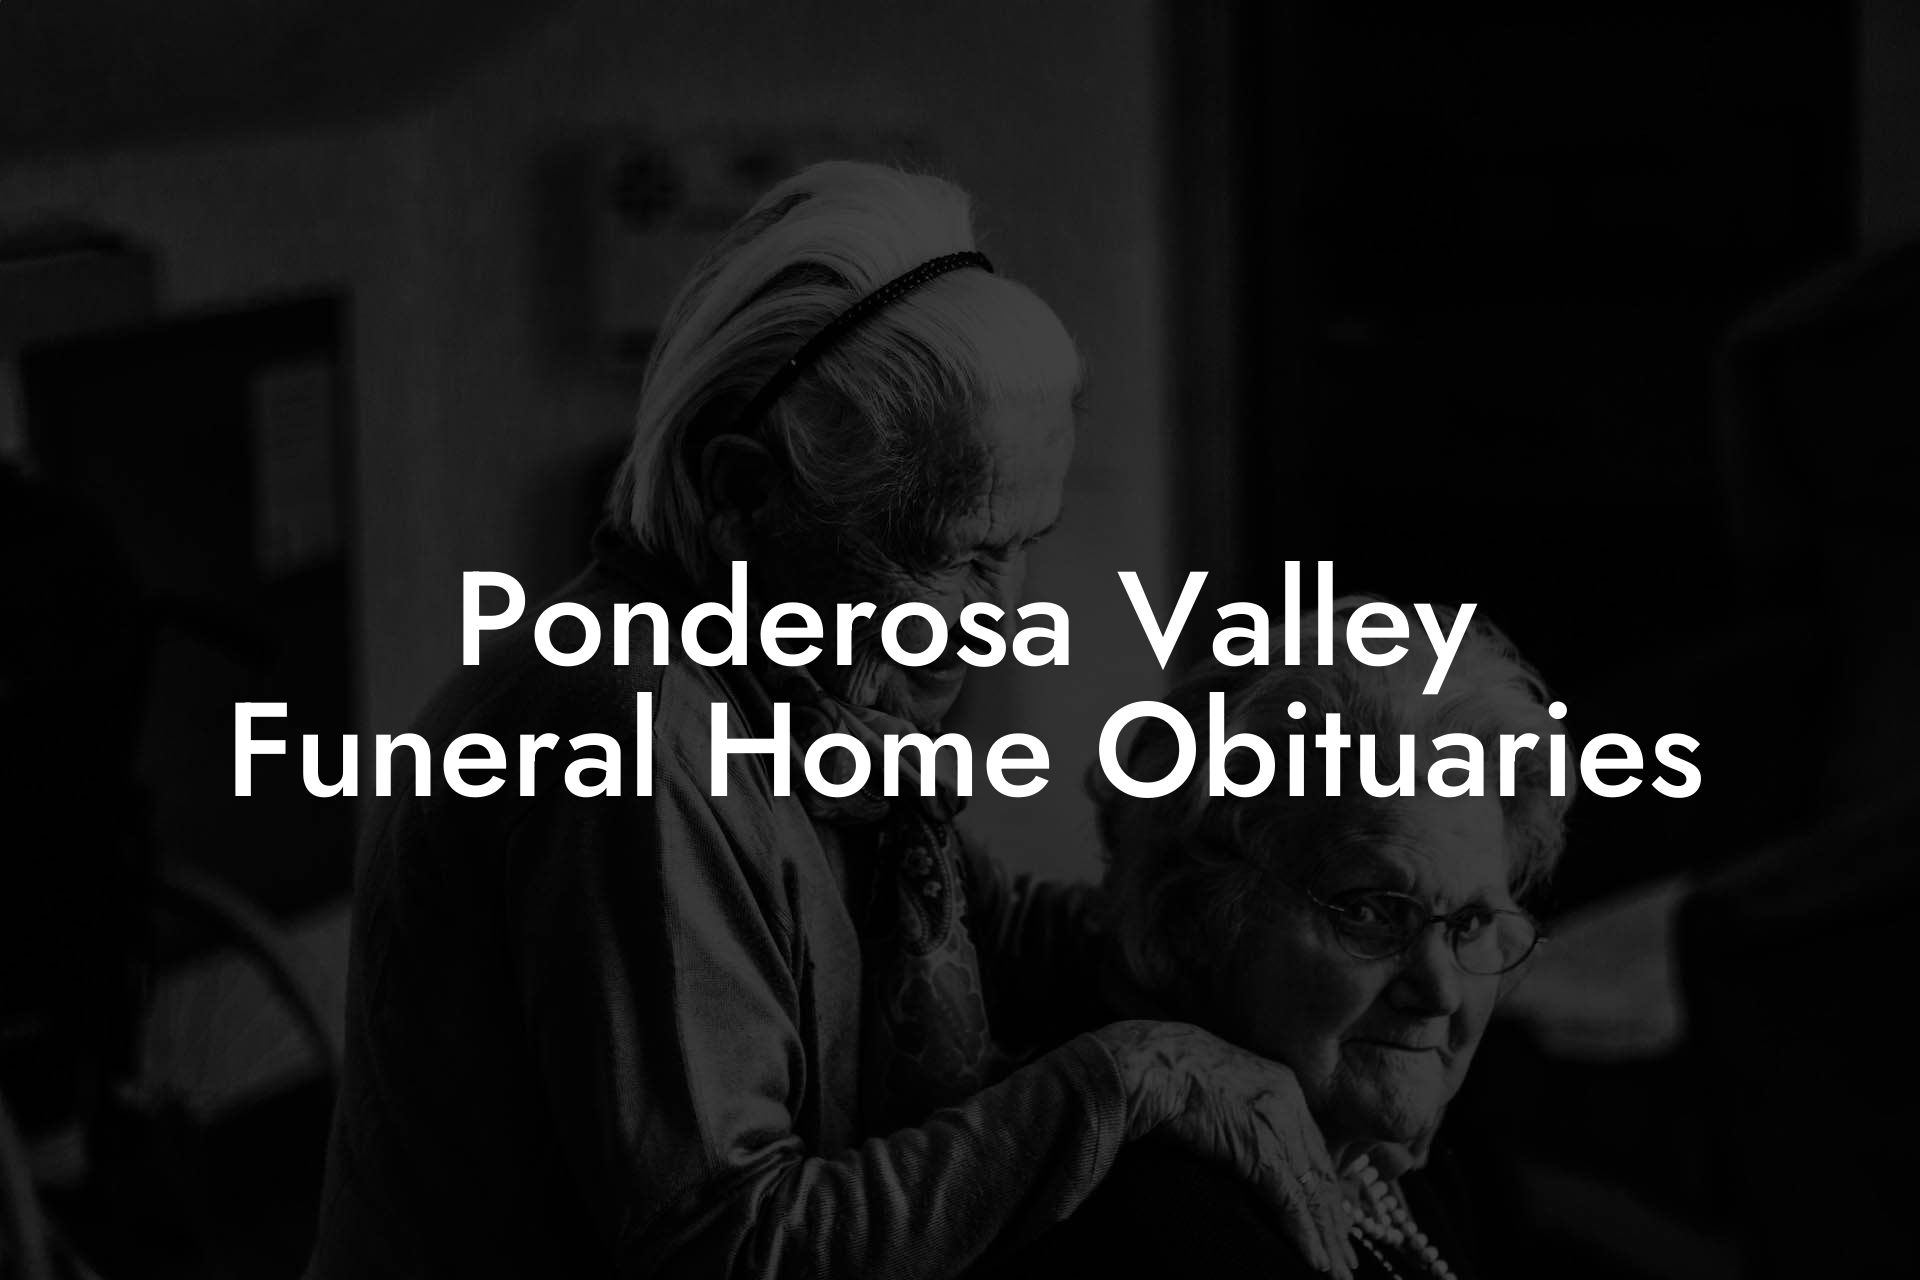 Ponderosa Valley Funeral Home Obituaries